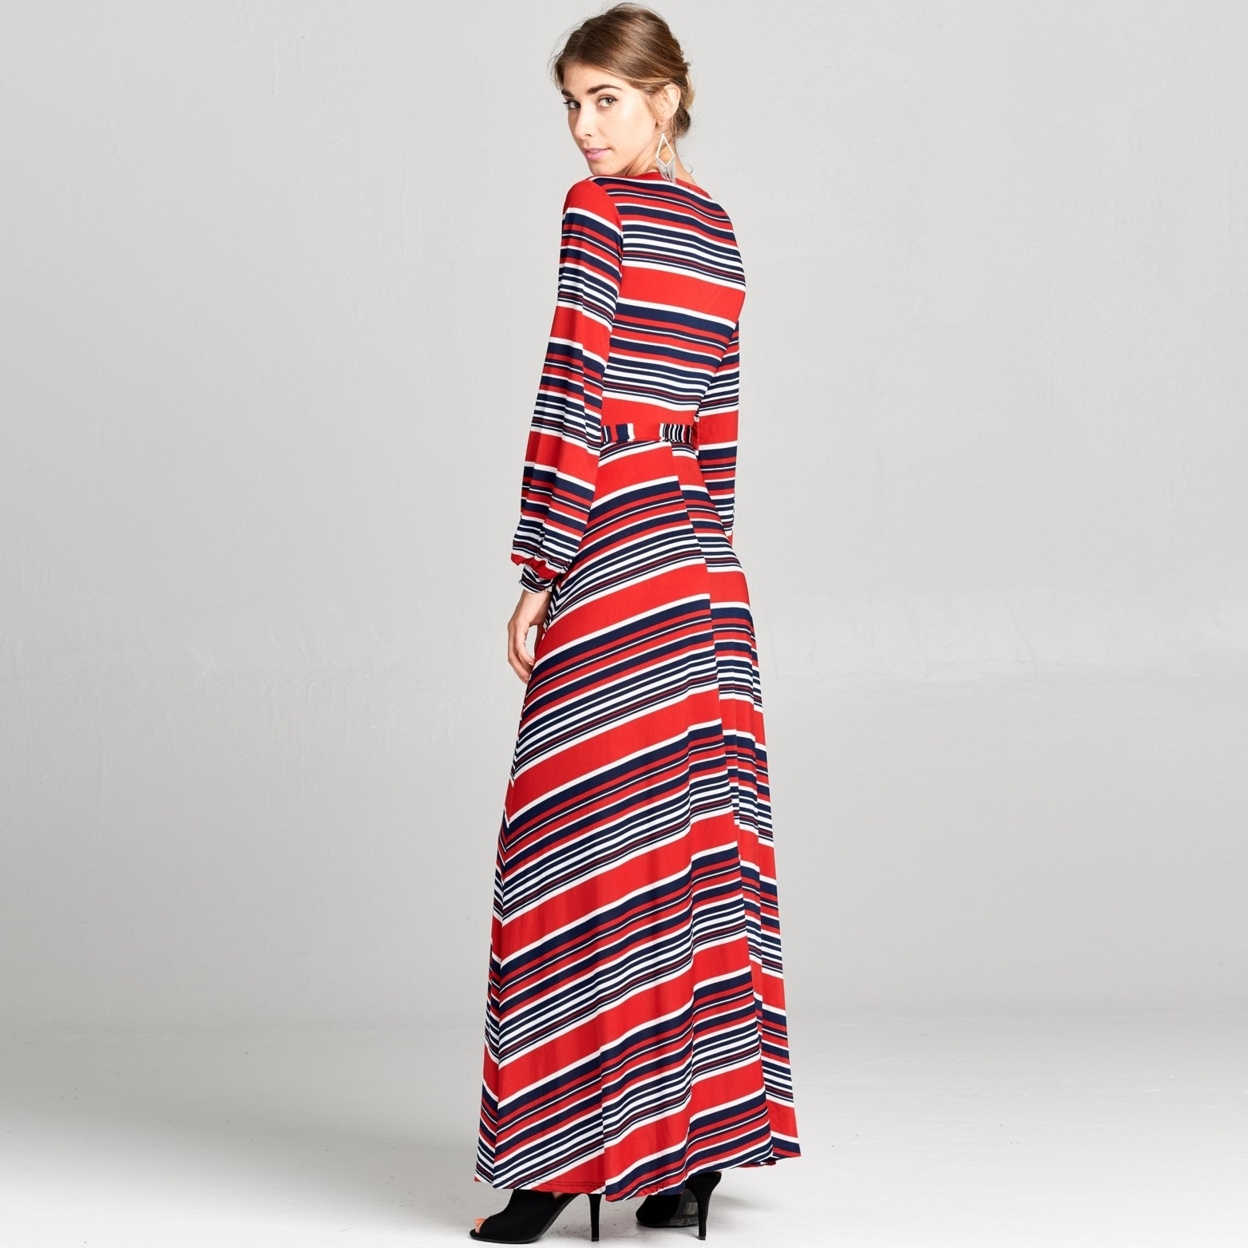 Cuffed Sleeve Venechia Stripe Dress - Red/navy, Medium (8-10)